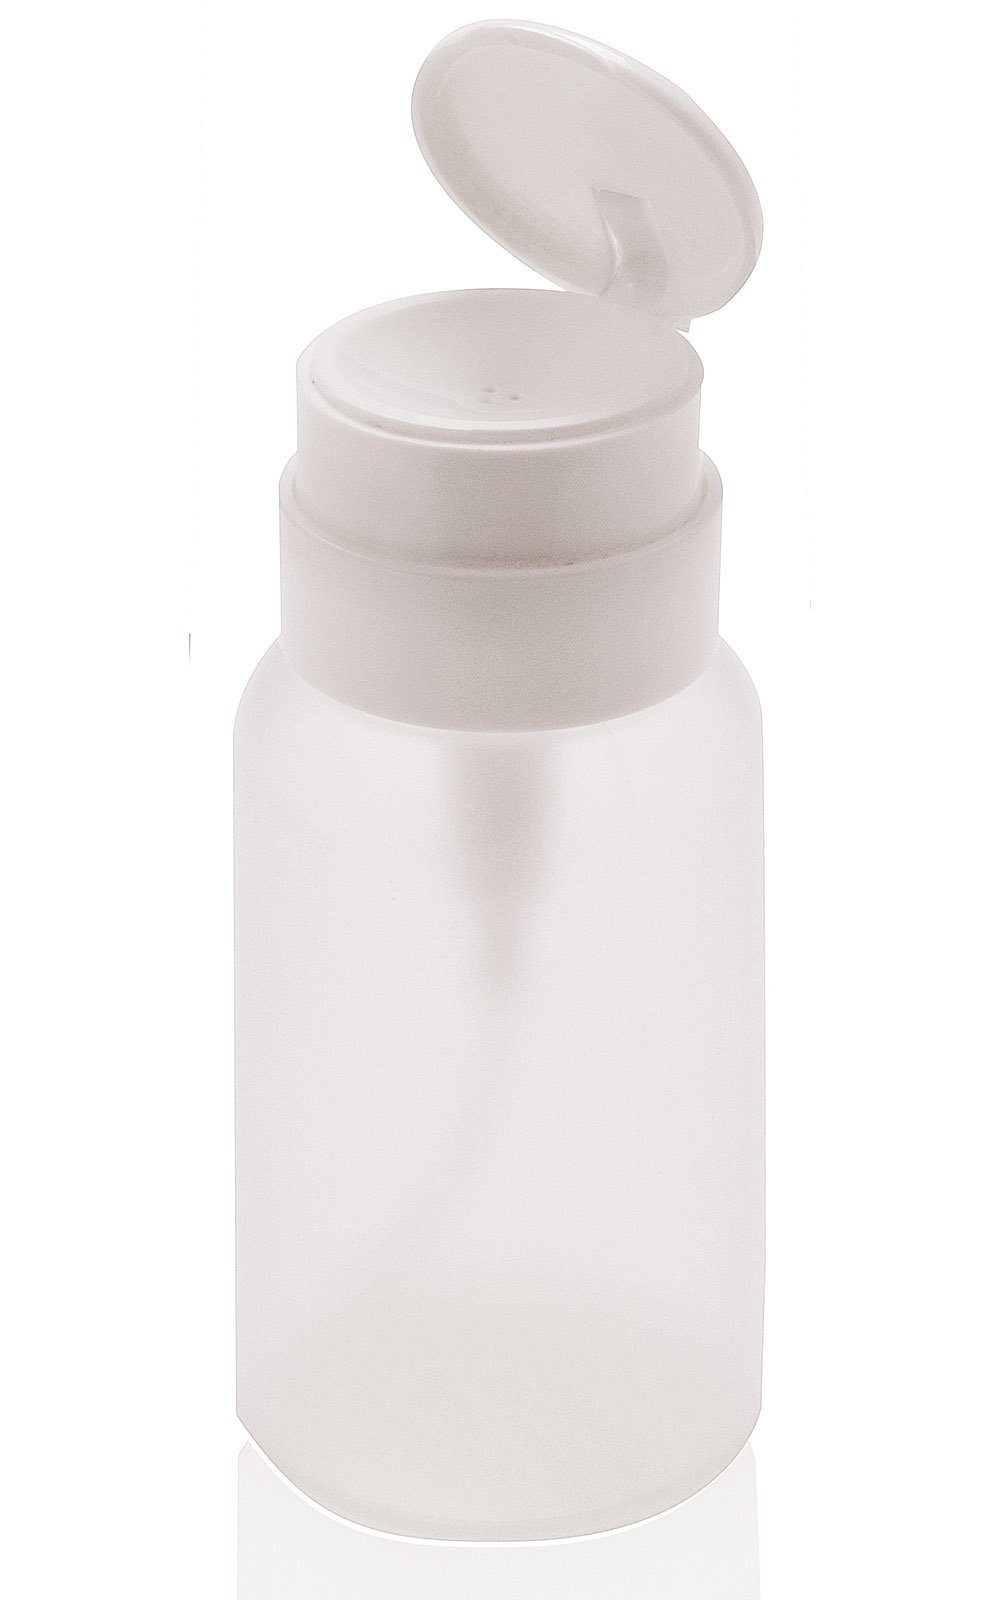 Kosmetex Pumpflasche transparent, 200ml Pumper, Nagel